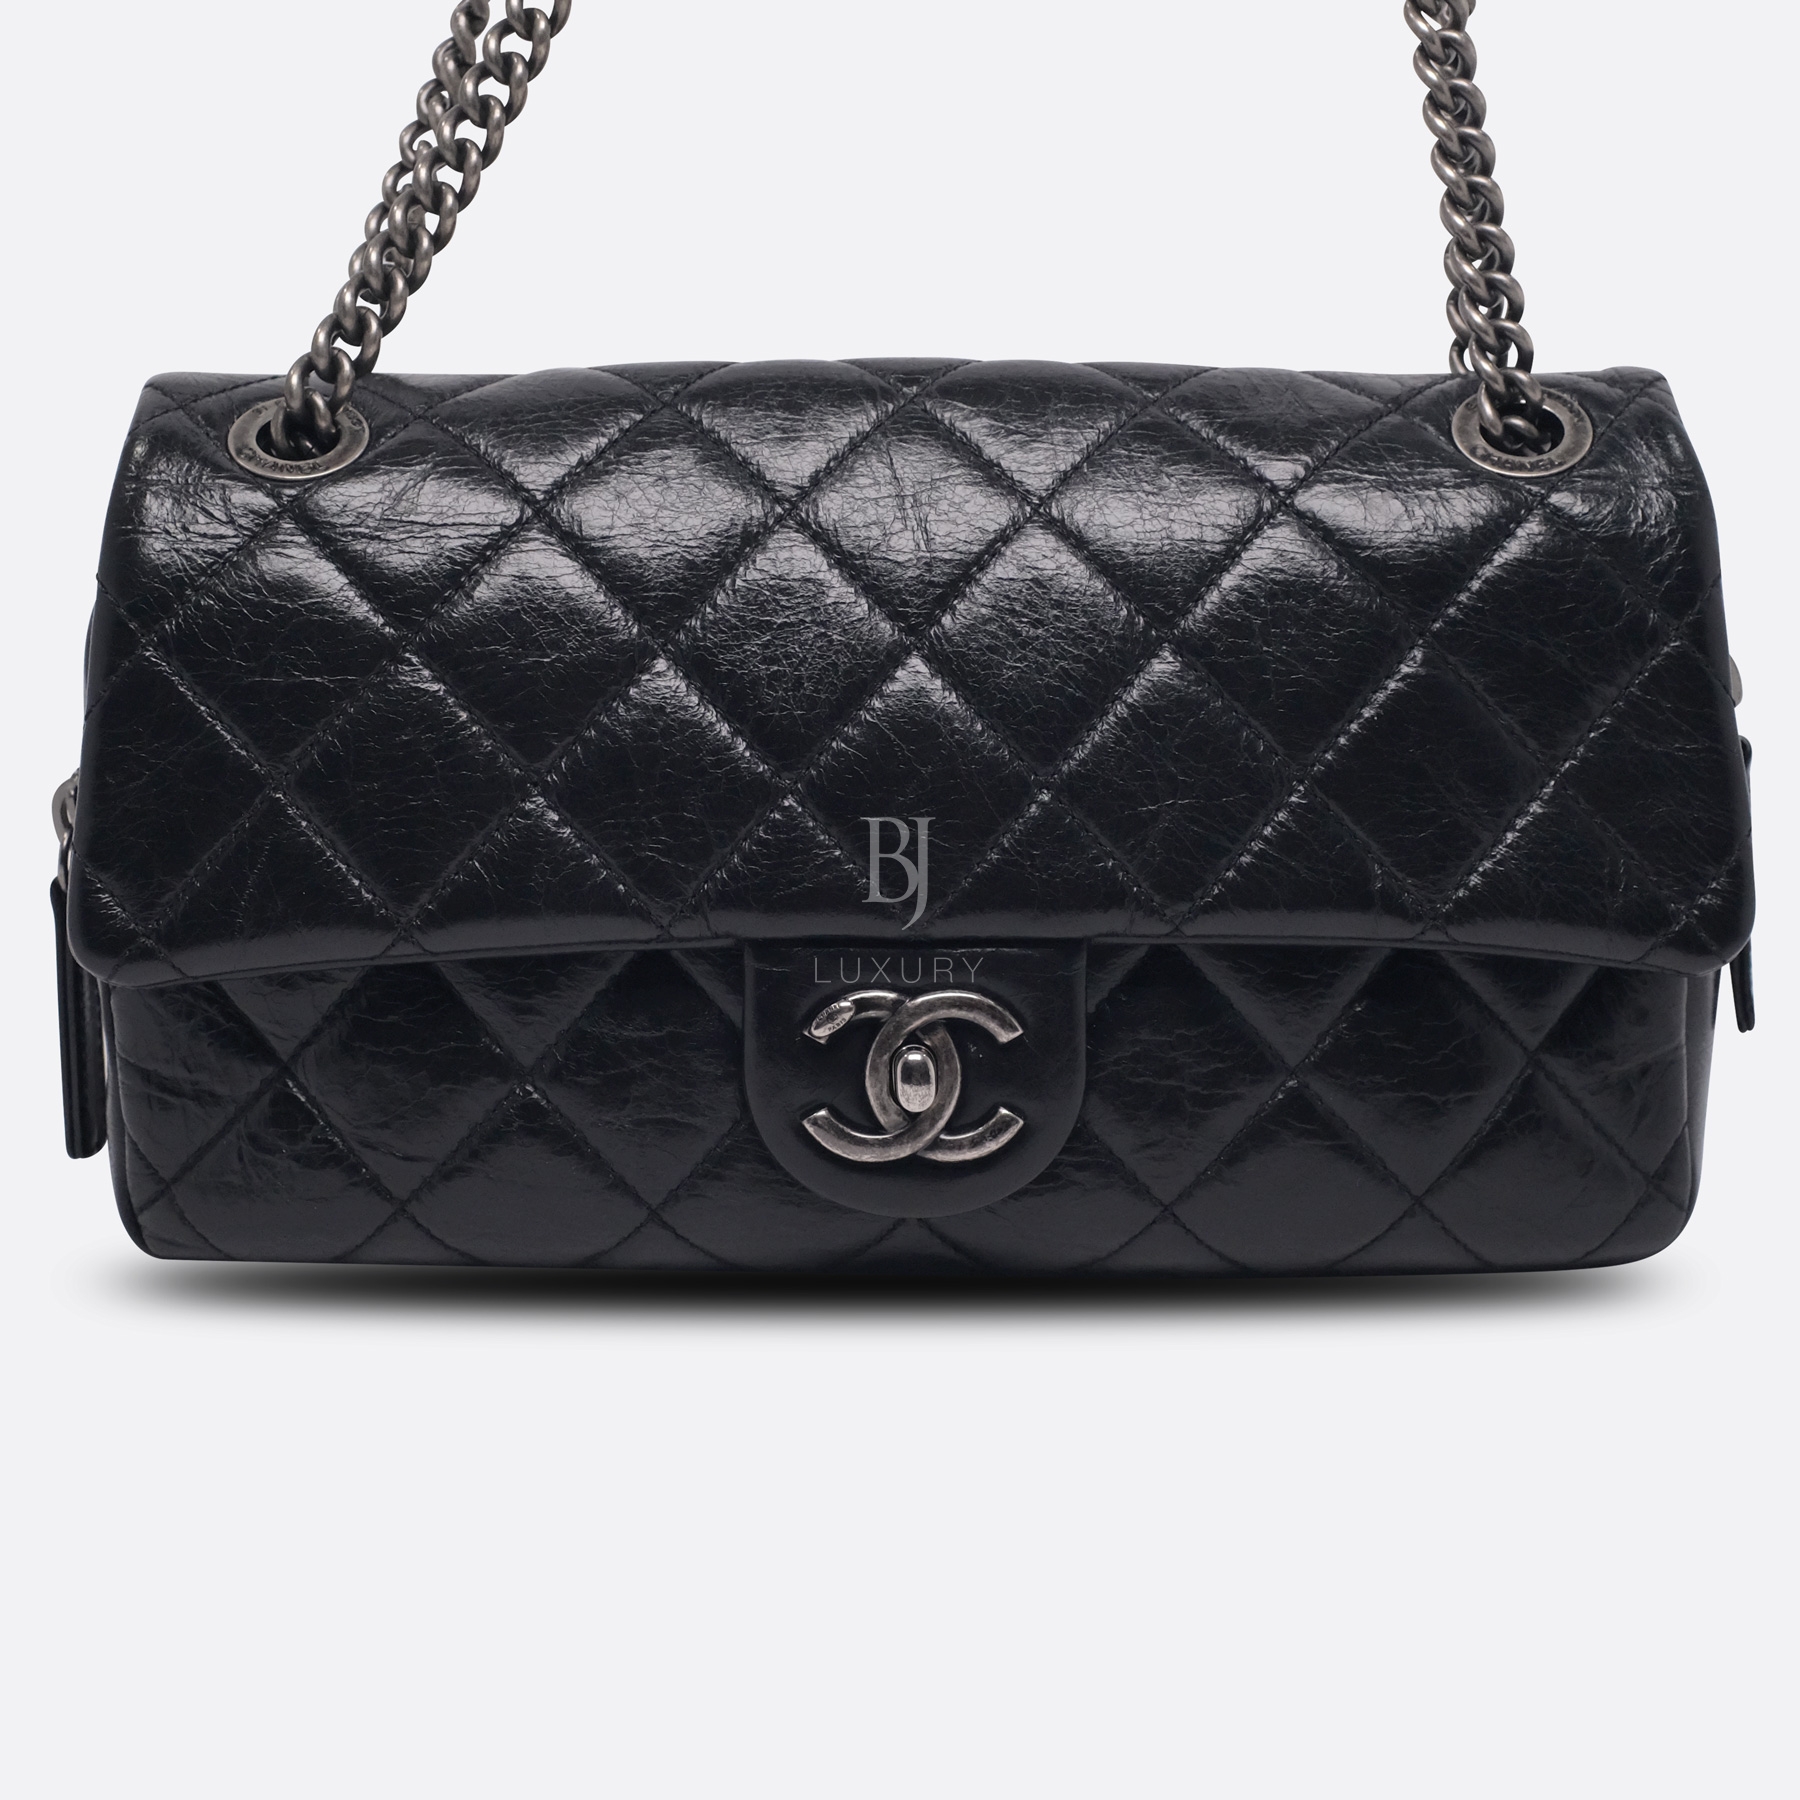 Chanel Flap Bag Aged Calfskin Ruthenium Medium Black BJ Luxury 1.jpg